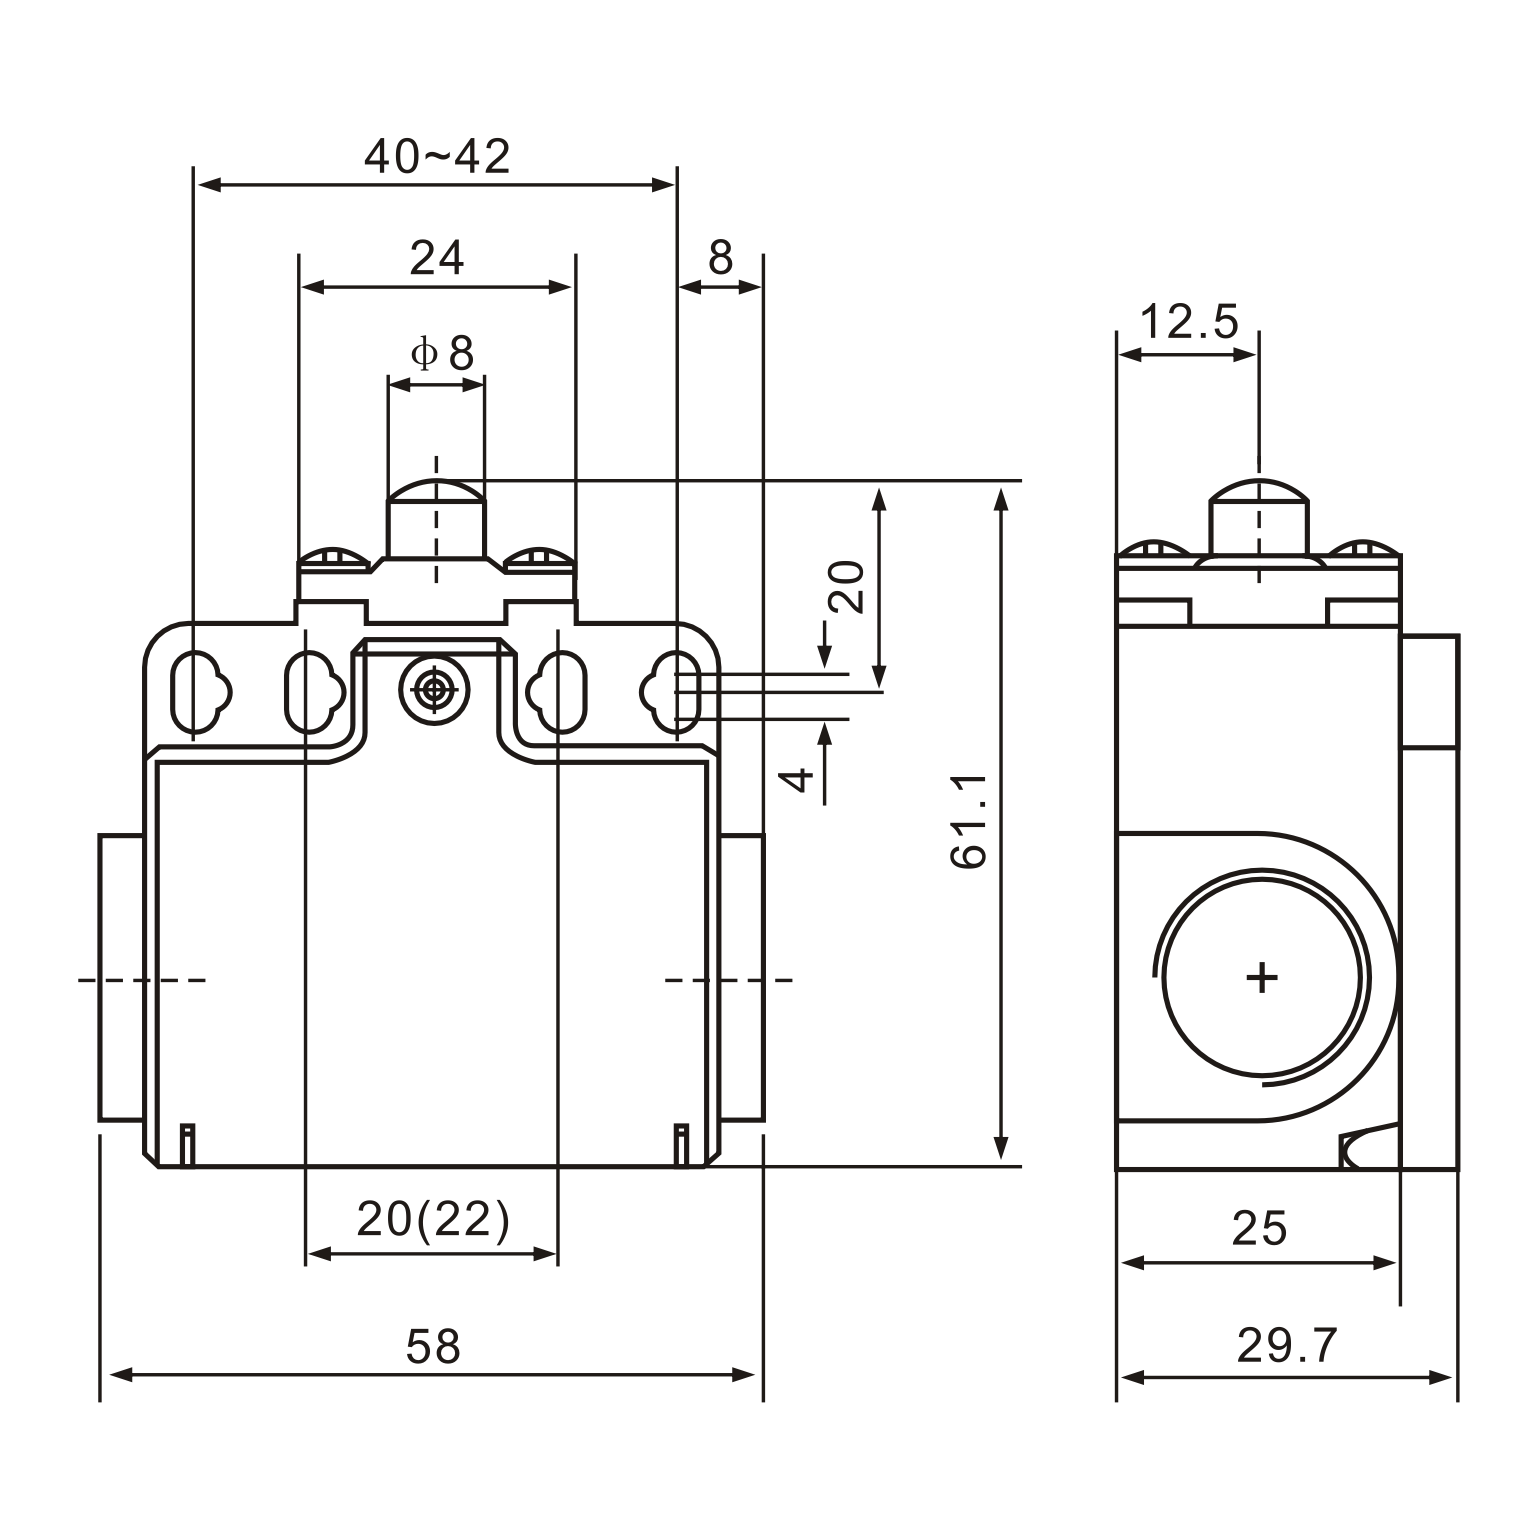 XCK-T110 Short Spring Plunger Actuator Limit Switch Diagram